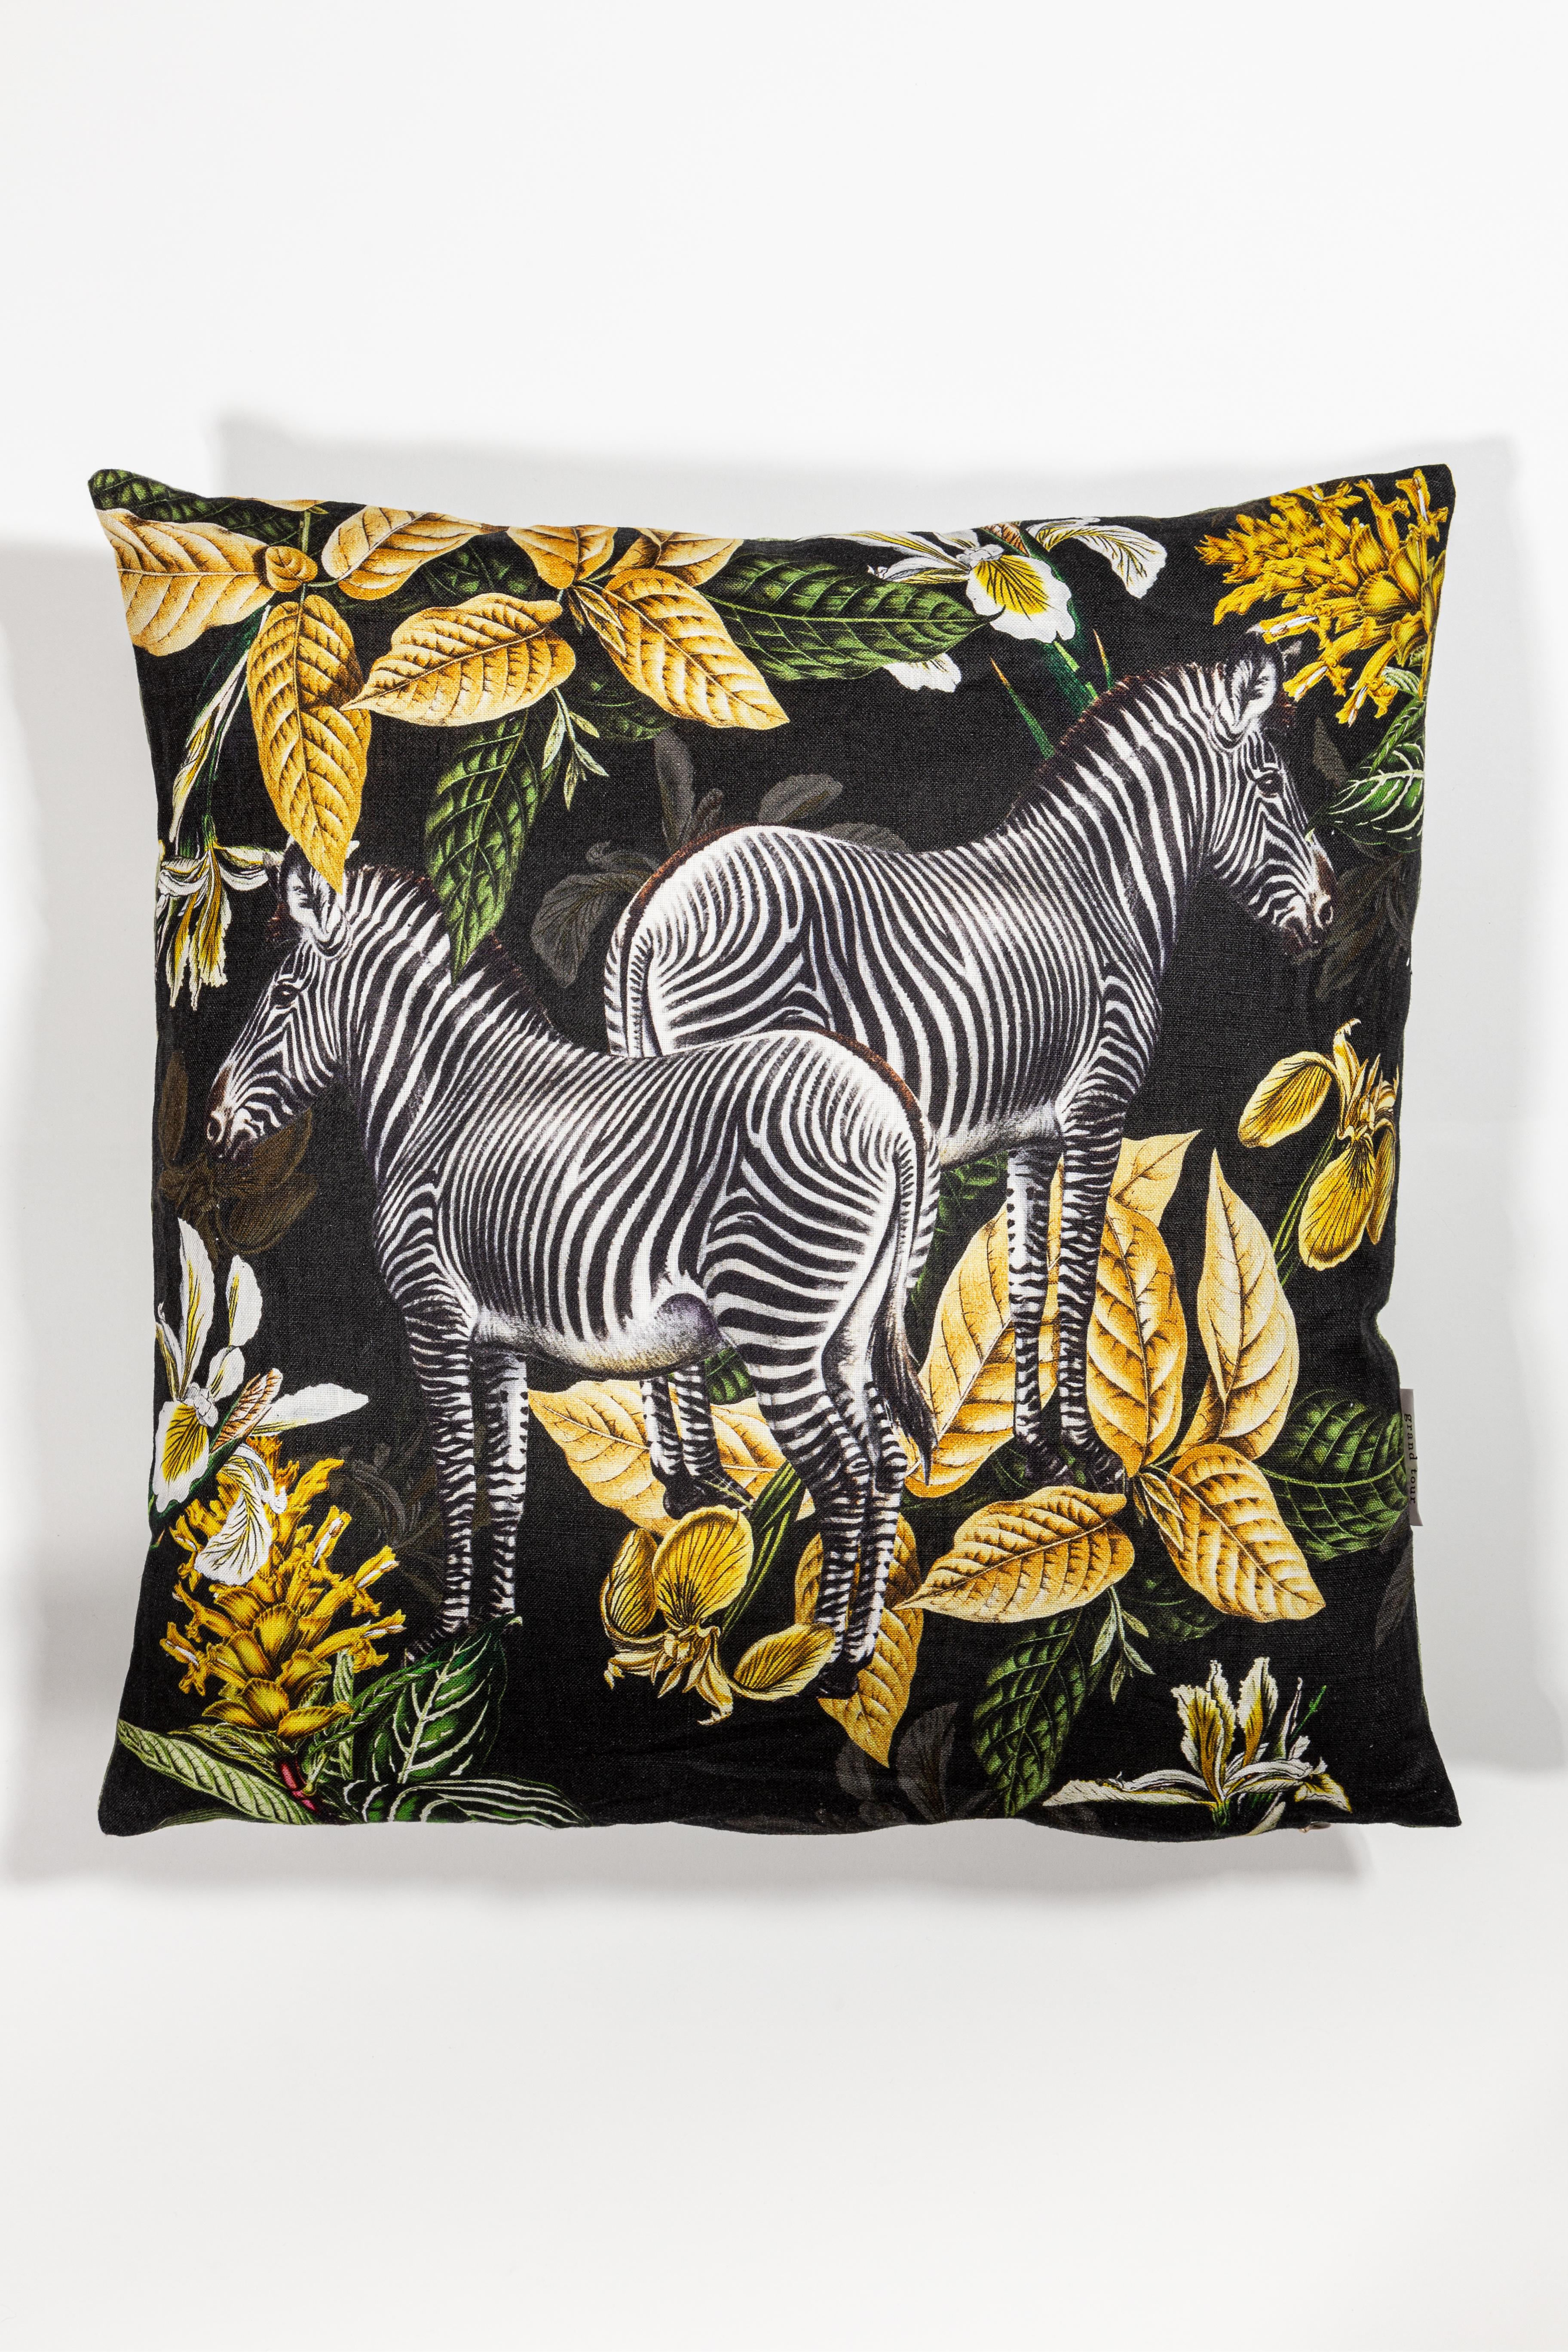 Animalia, Parrots, Contemporary Linen Printed Pillow by Vito Nesta For Sale 1